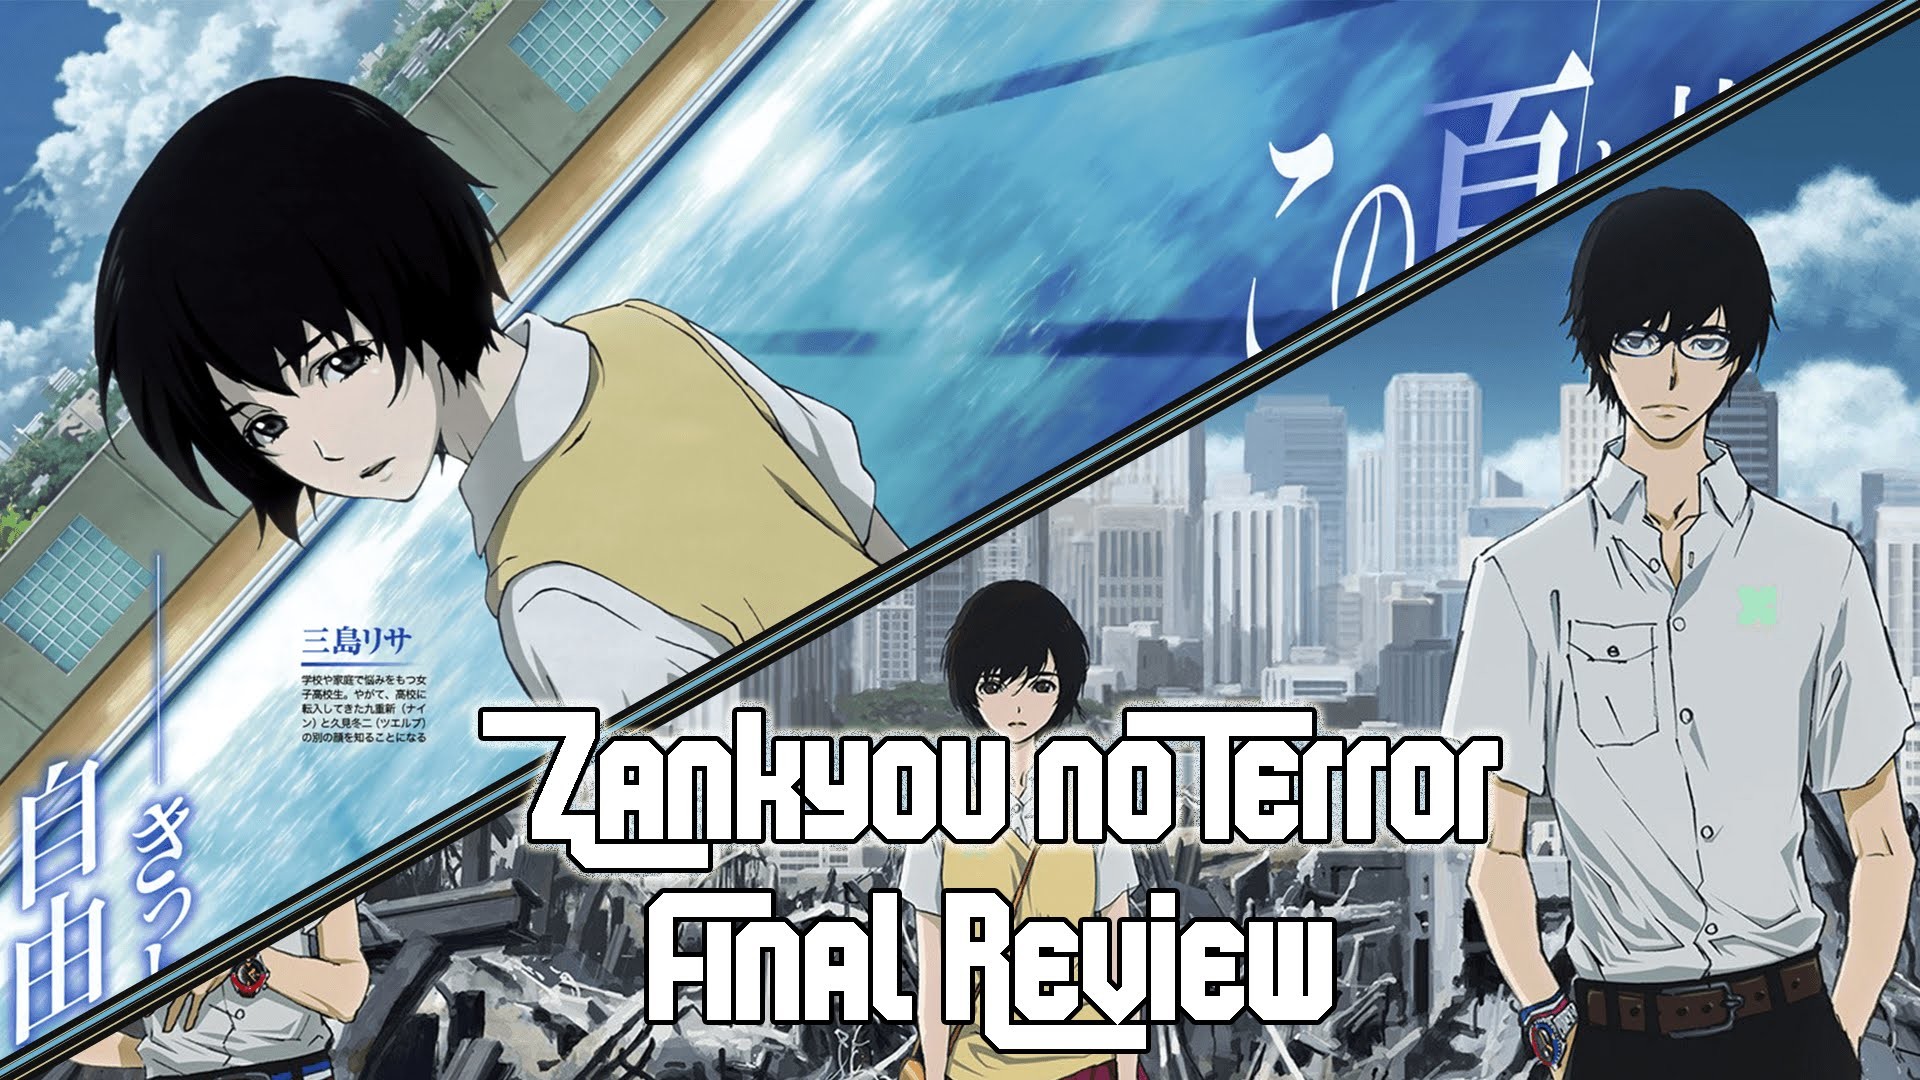 1920x1080 Zankyou no Terror æ®é¿ã®ãã­ã« Episode 11 Finale Review - Anime of the Season -  Anime Review